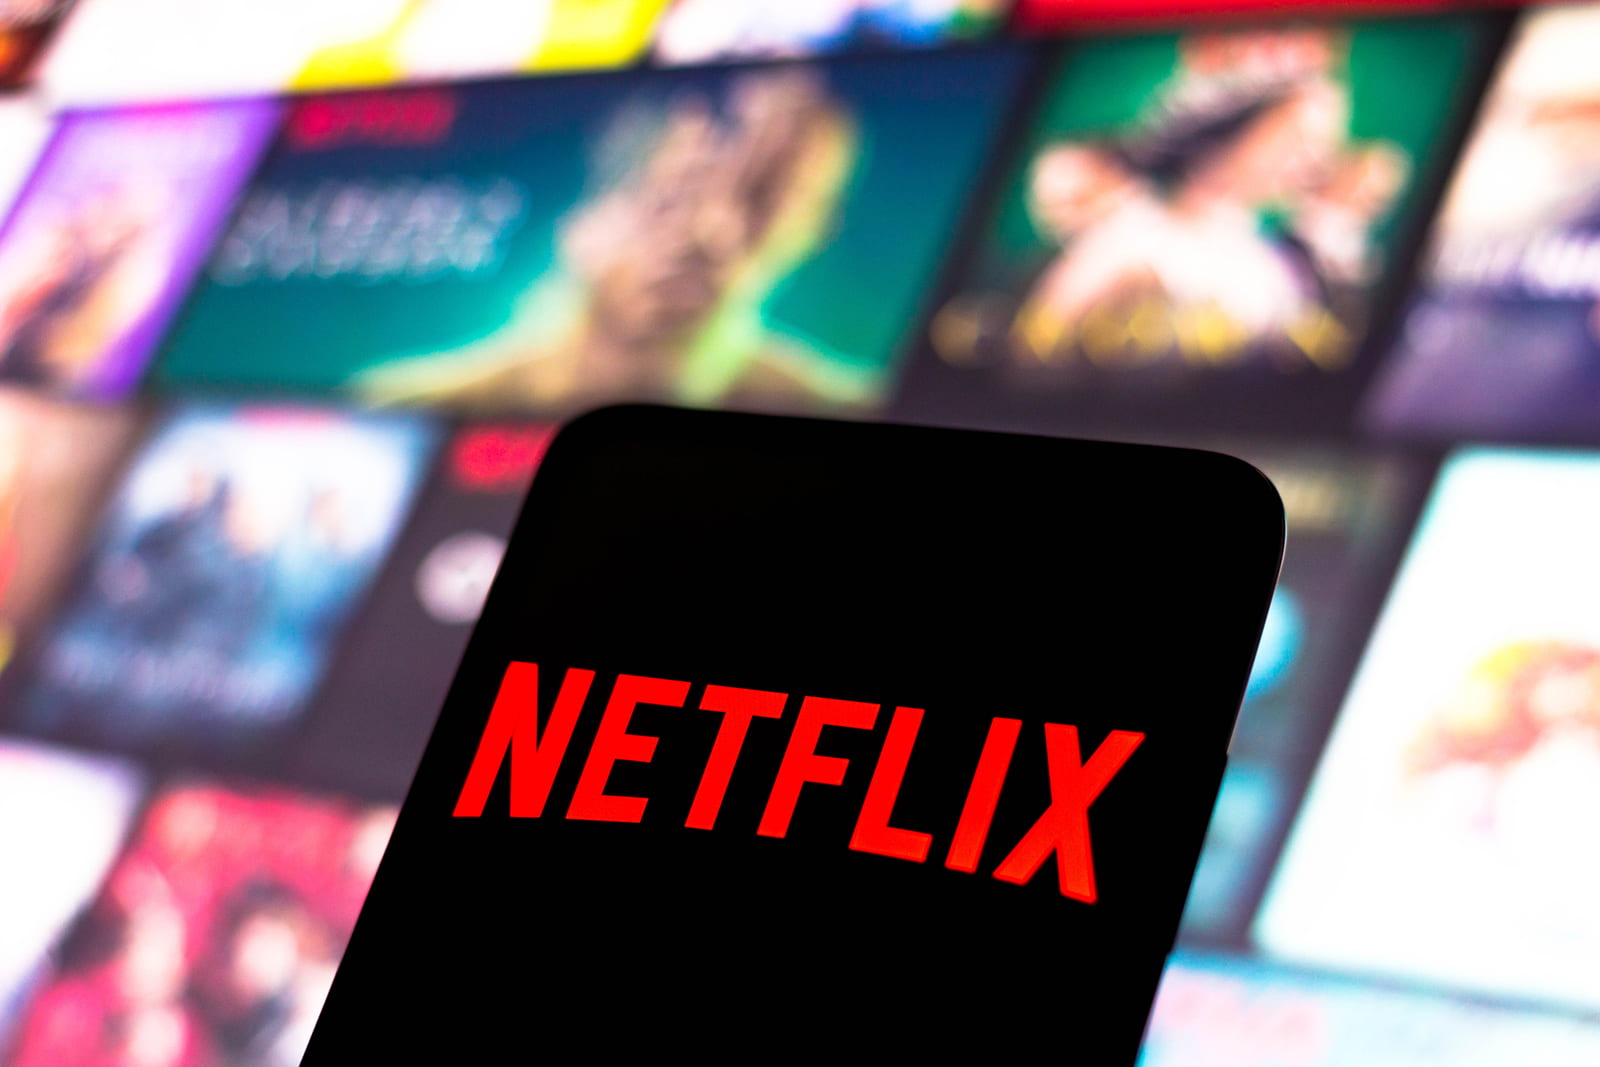 Netflix Declines 'Once In A Lifetime' Google Proposal